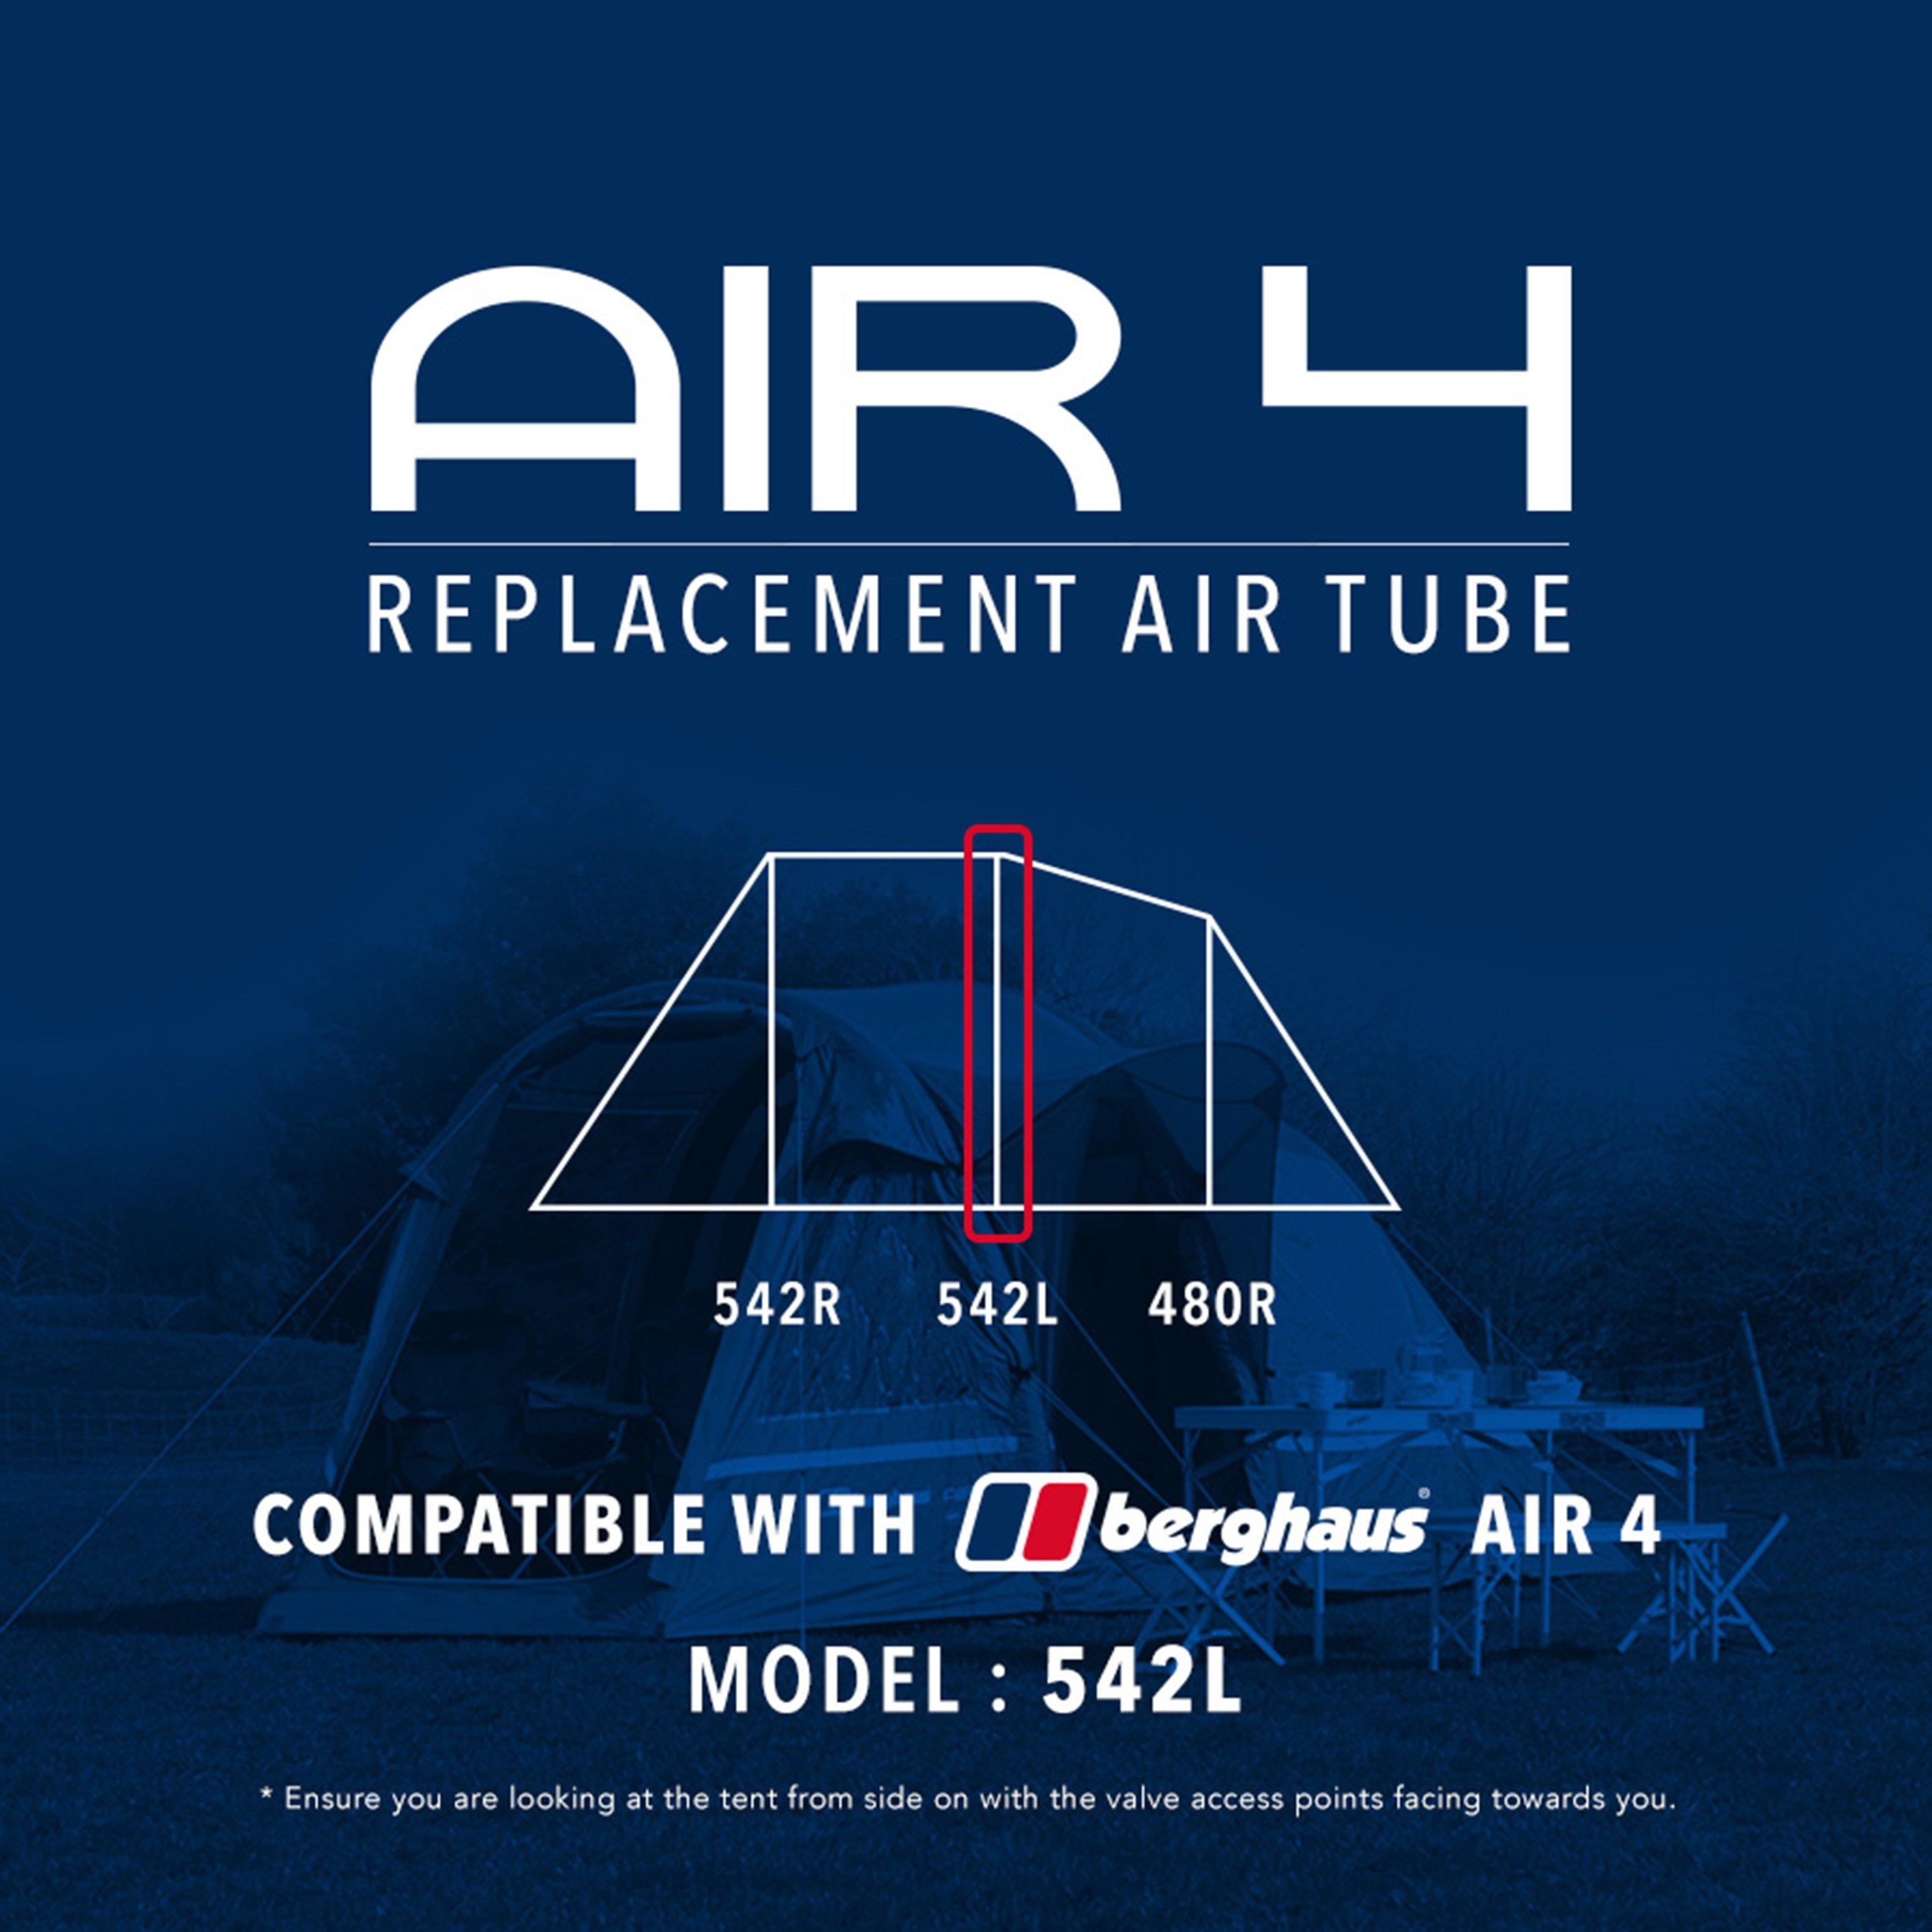 Eurohike Air 4 Tent Replacement Air Tube - 542L - Black, Black